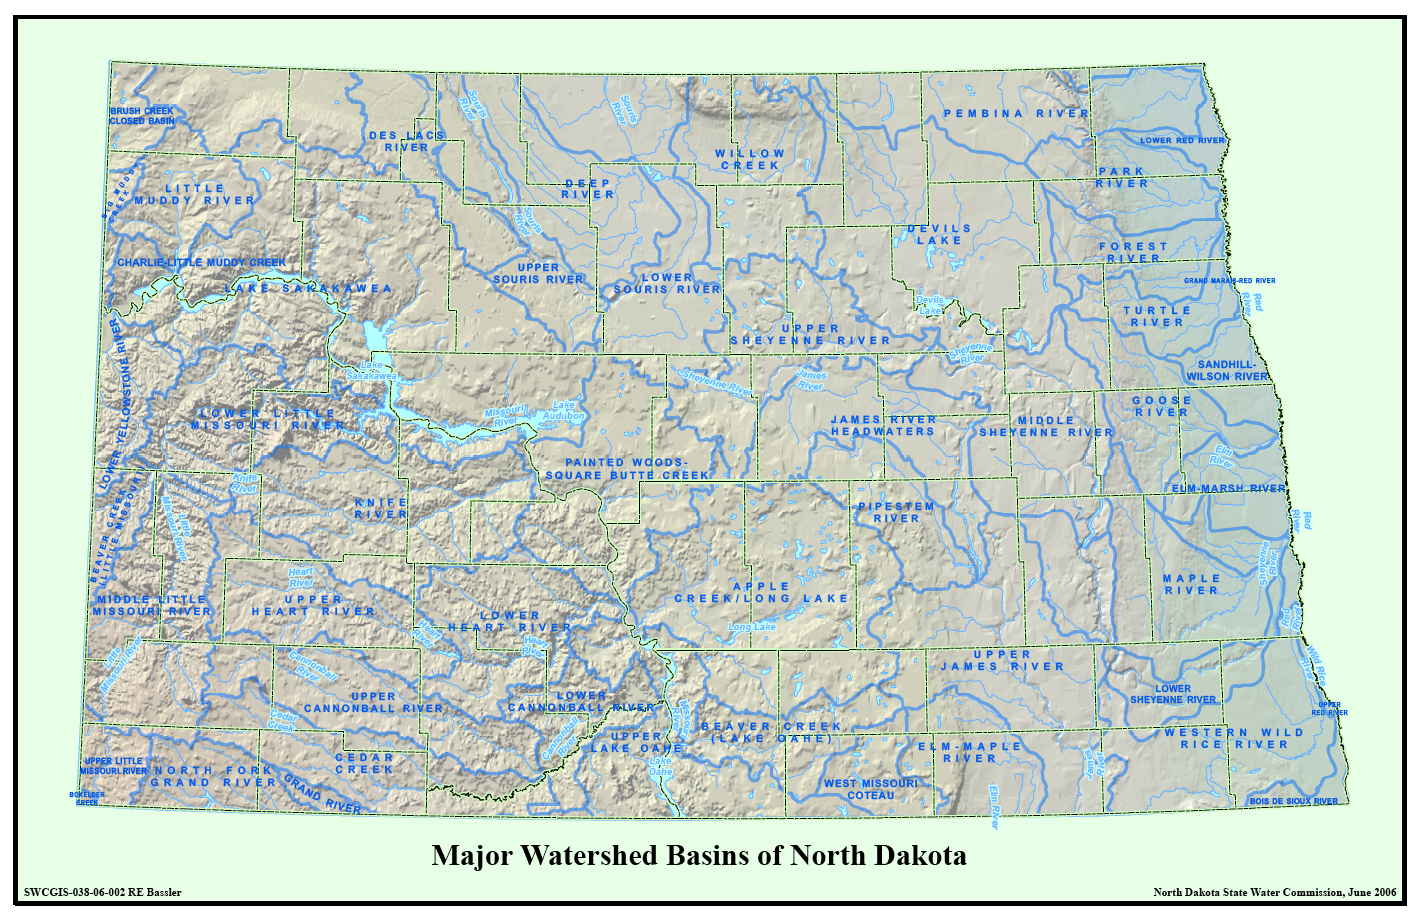 Major Drainage Sub-Basins of North Dakota Map